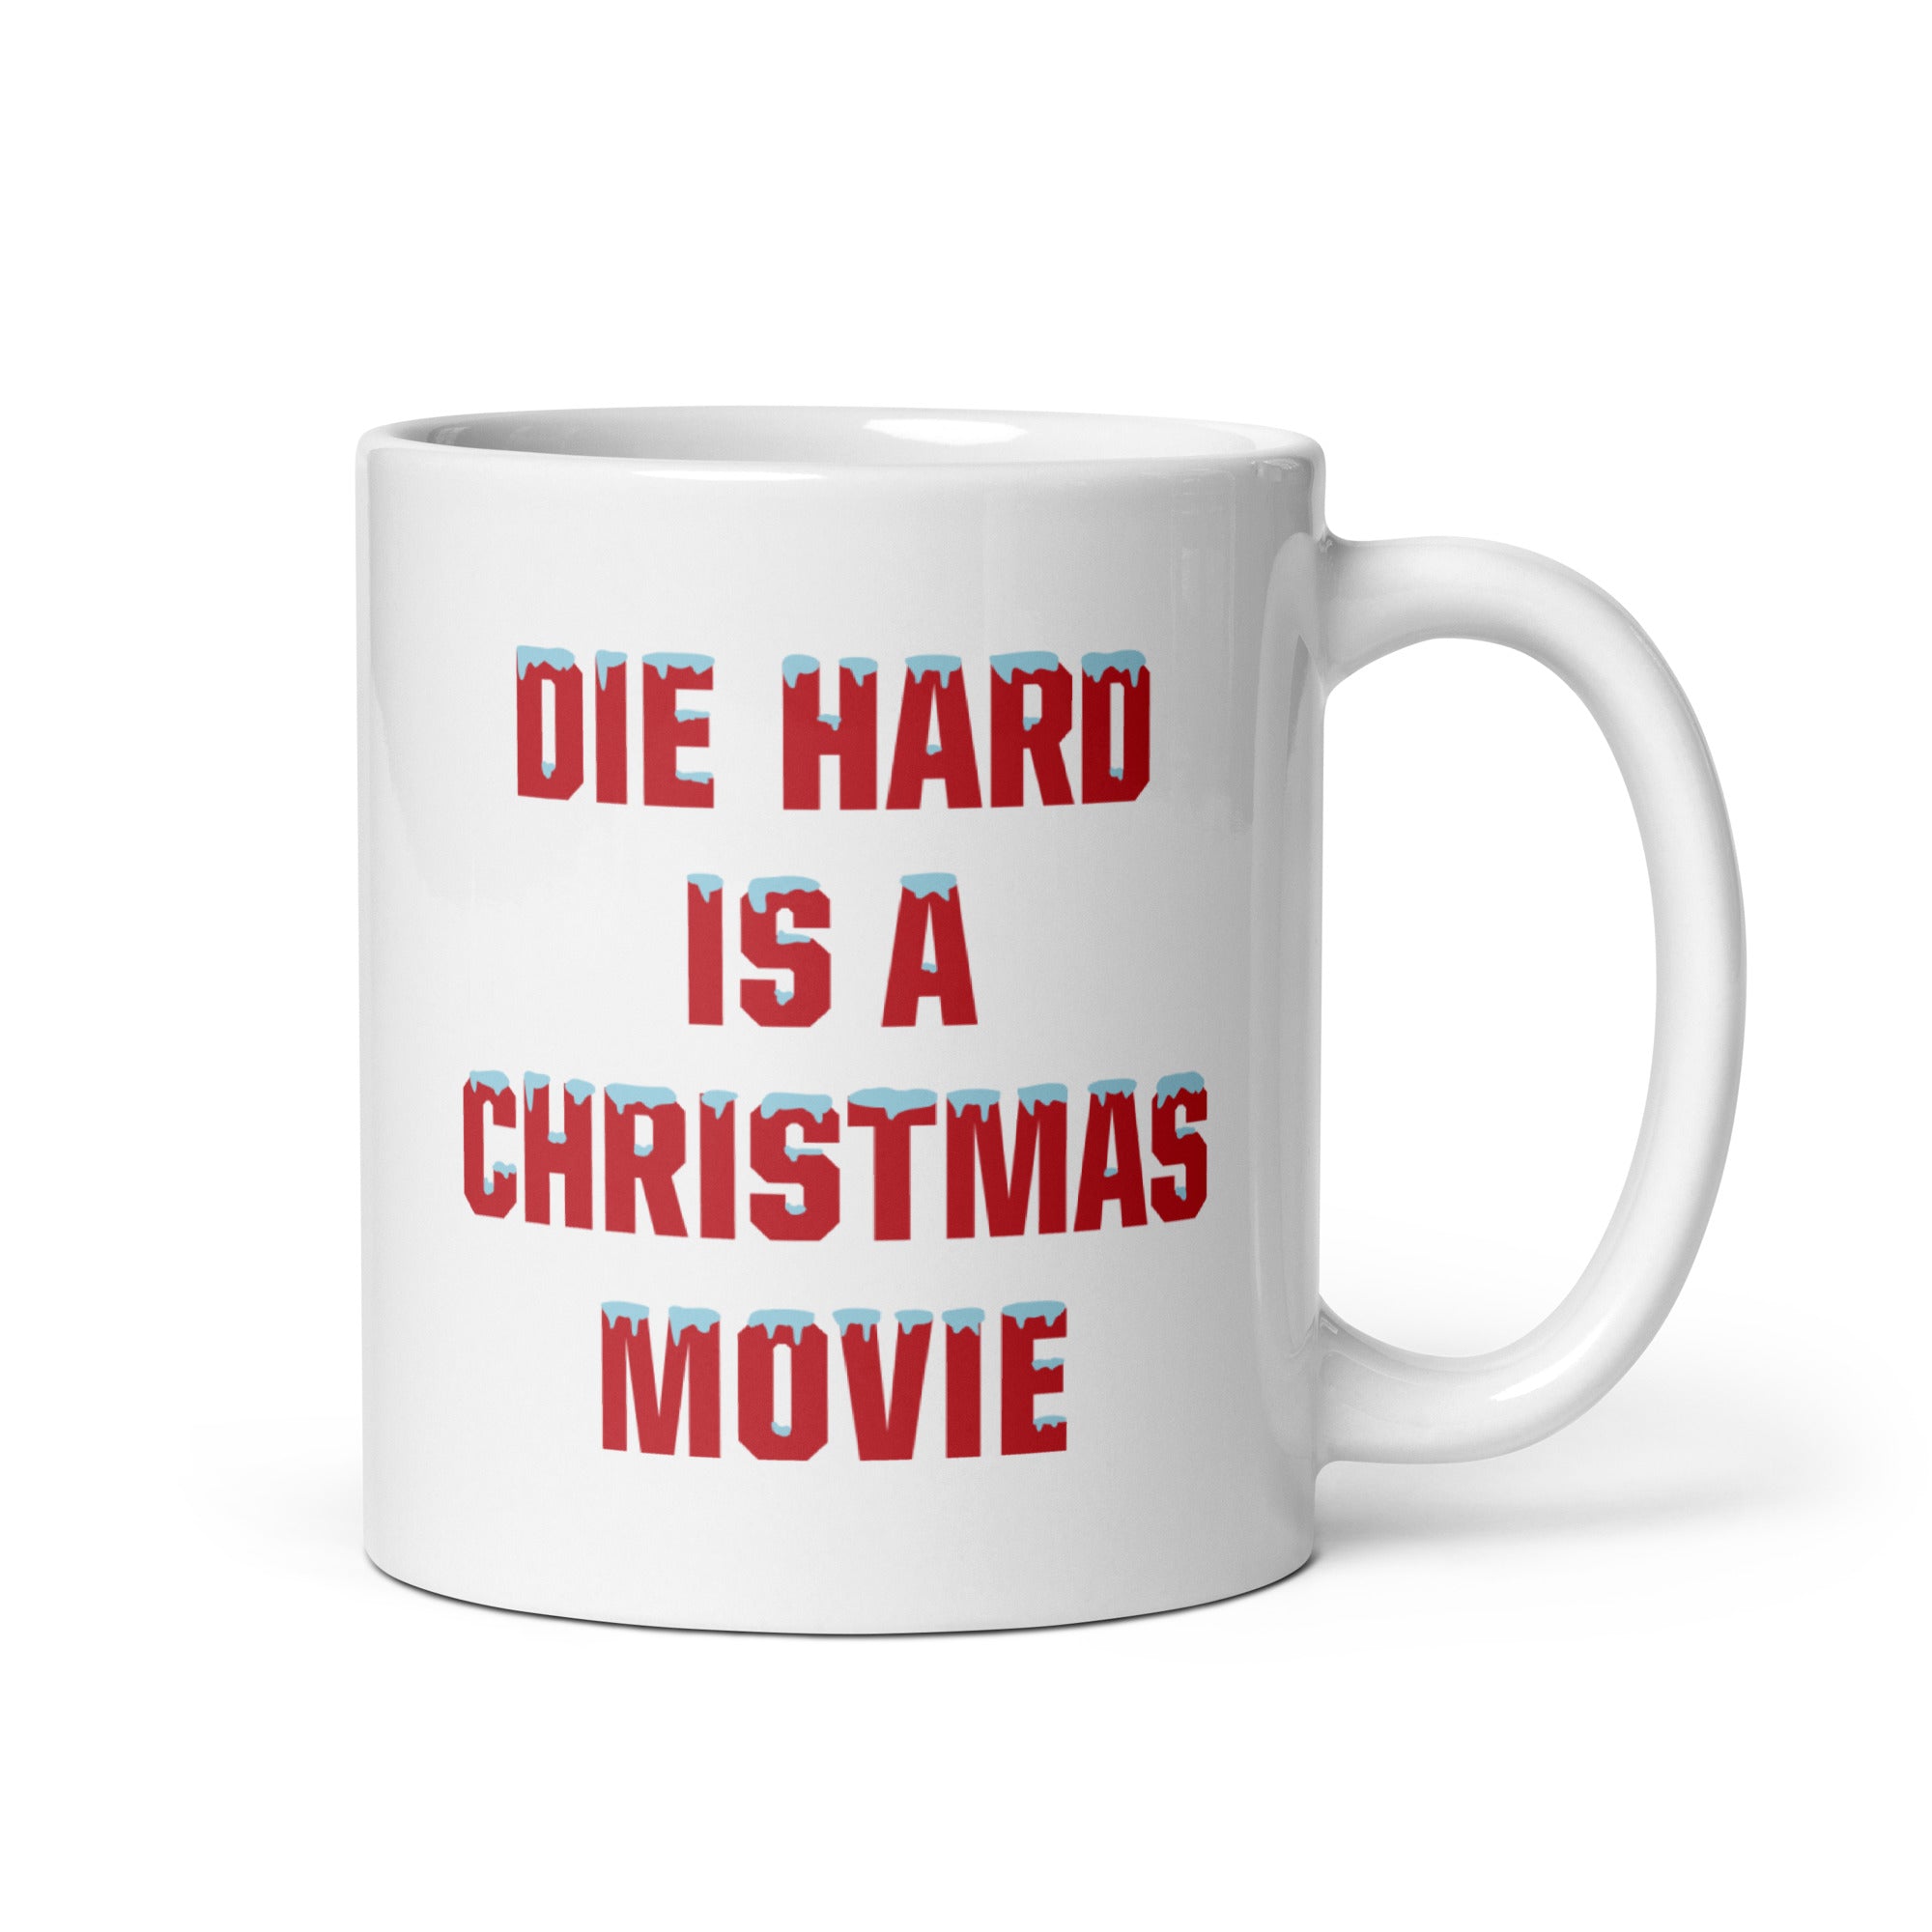 Die Hard is a Christmas Movie - 11oz Coffee Mug